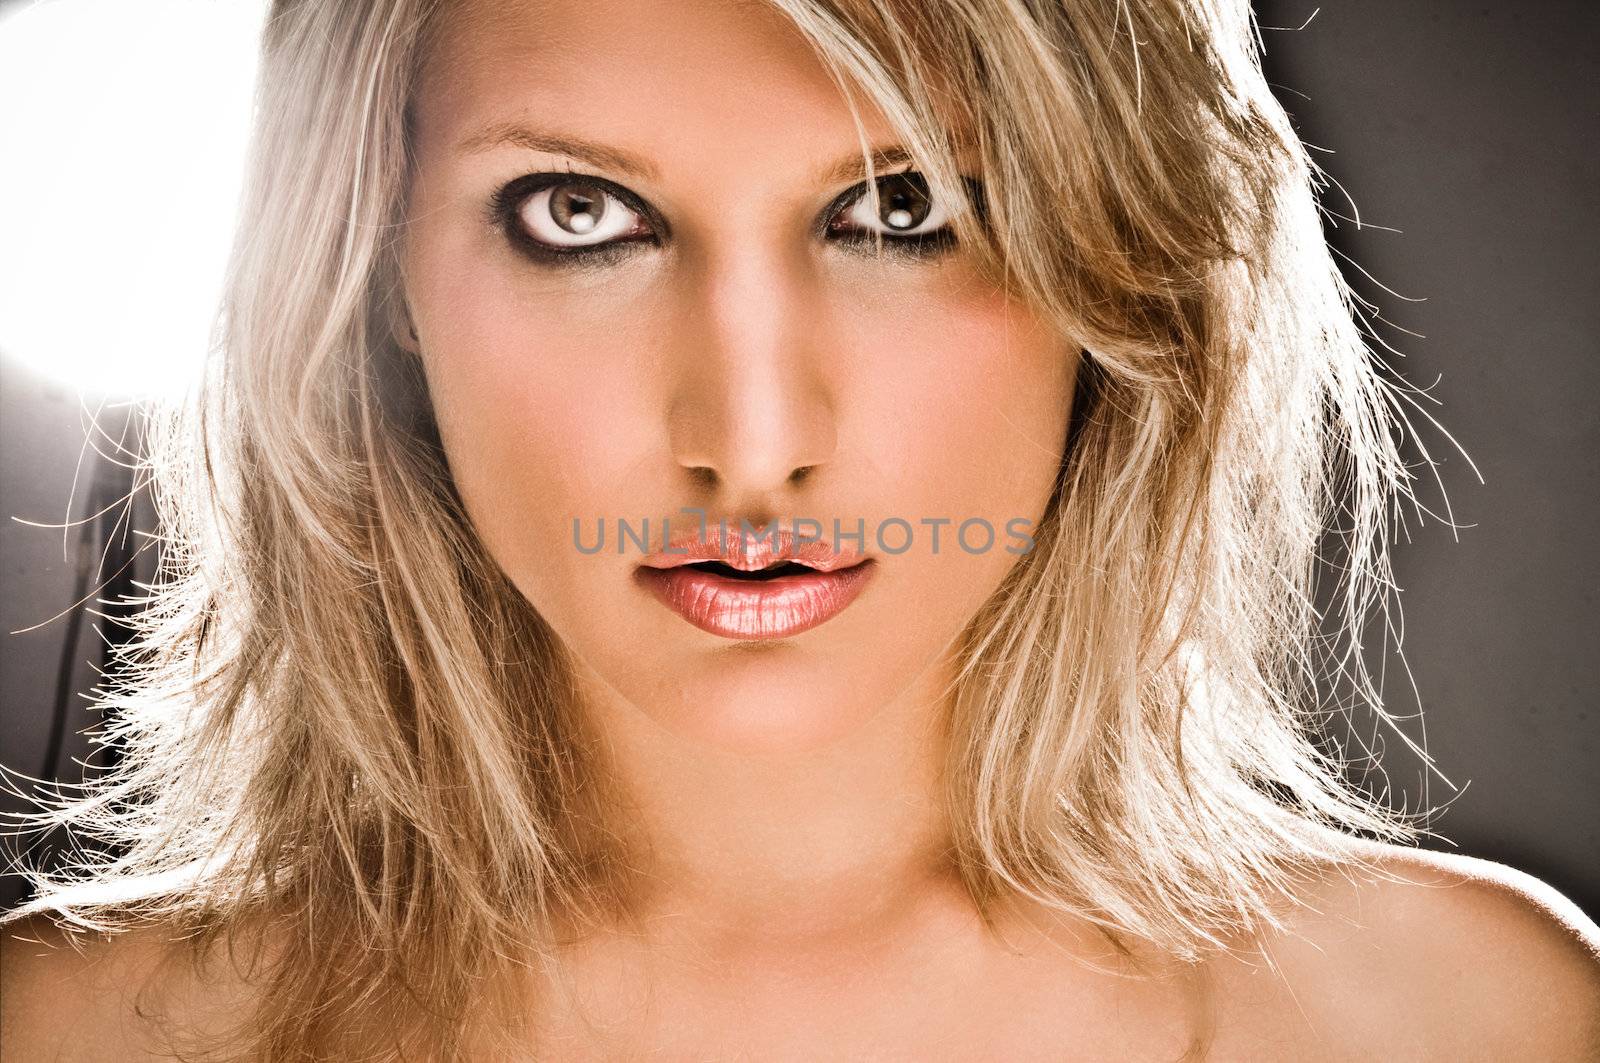 Closeup Portrait Of A Beautiful Blond Woman by nfx702